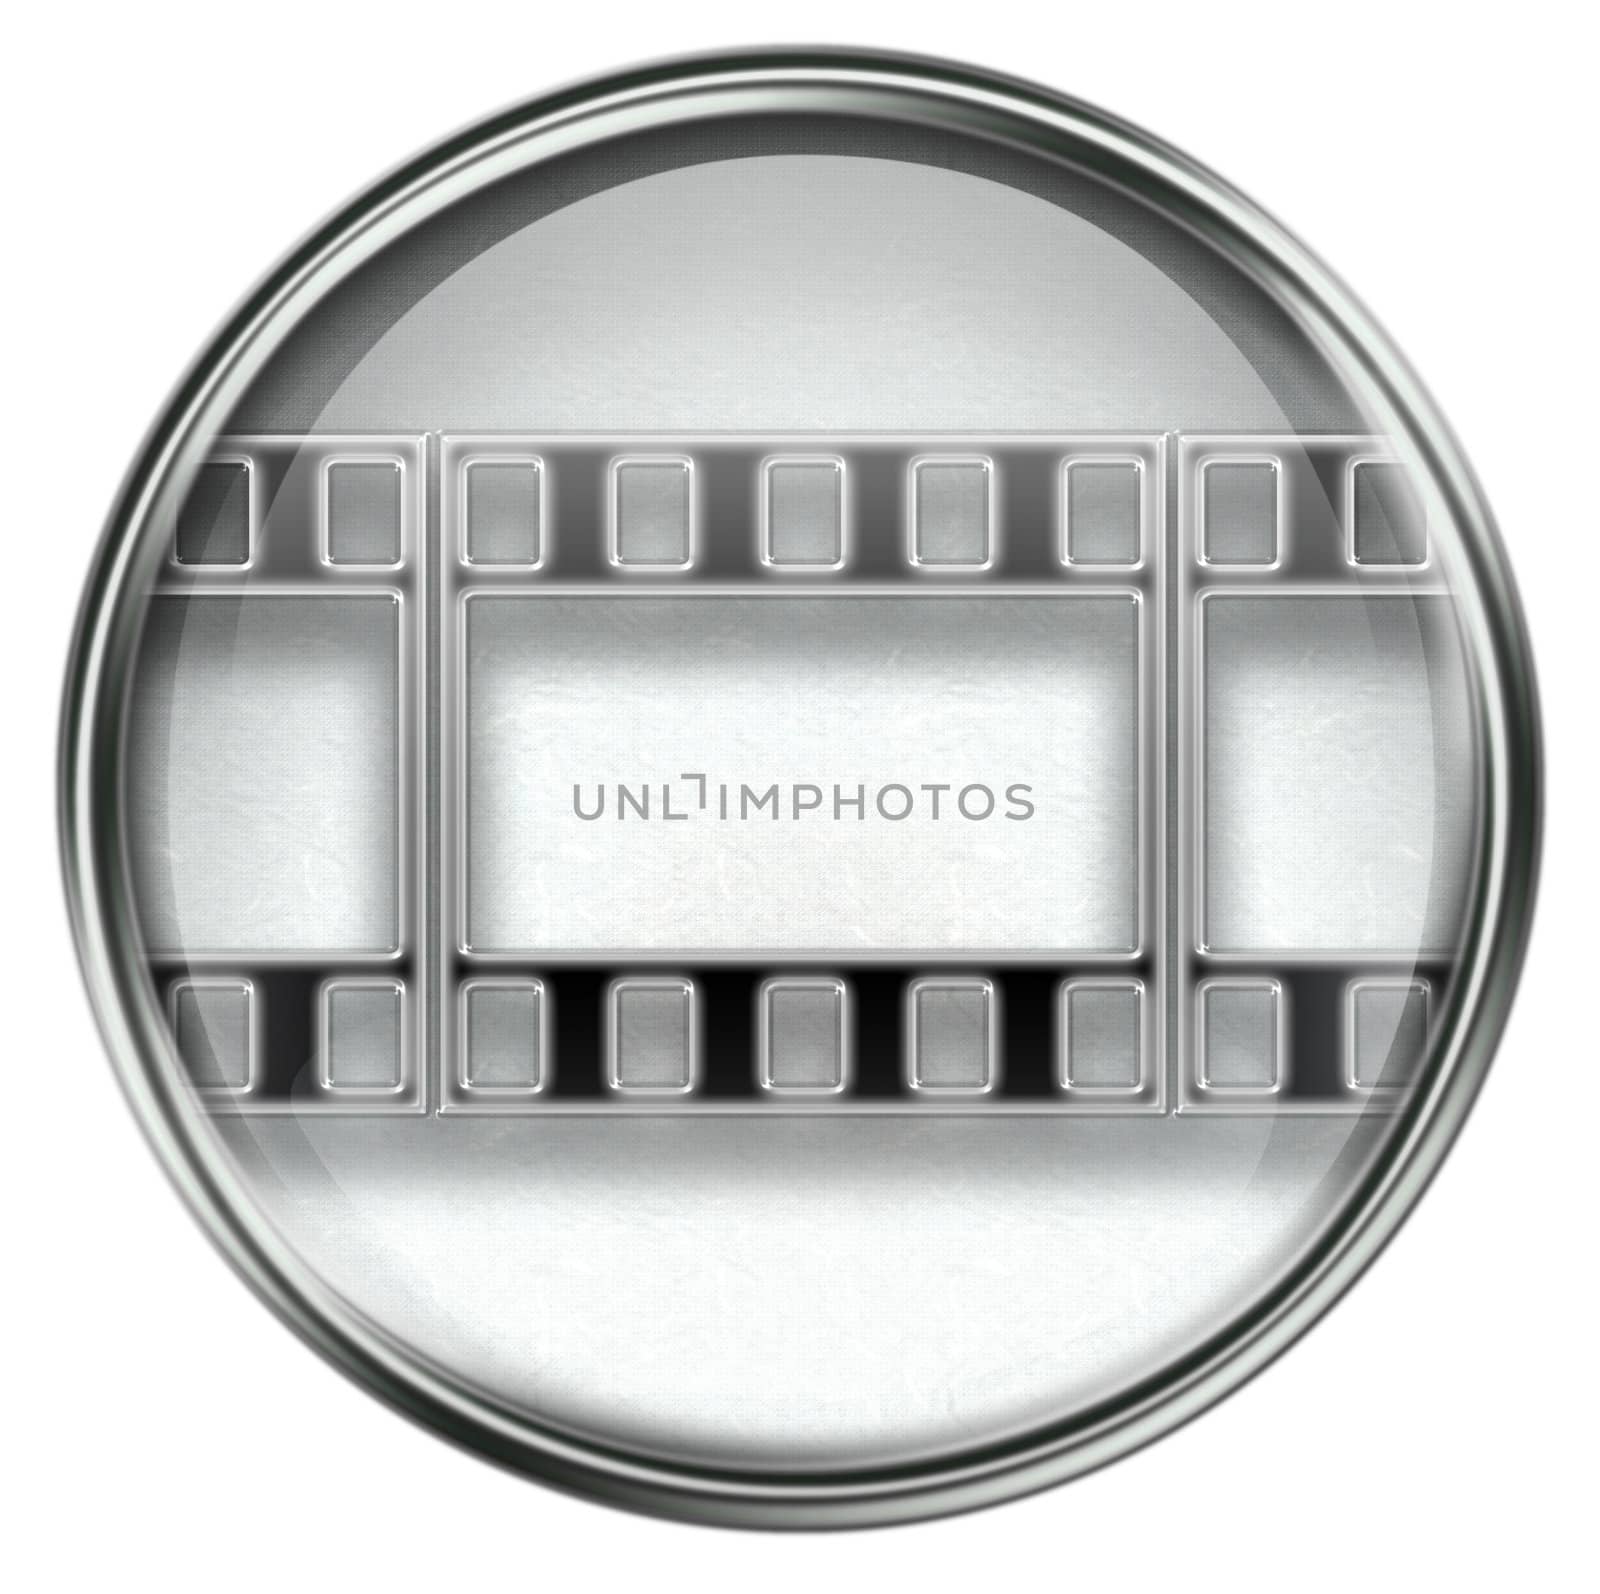 Film icon grey, isolated on white background.